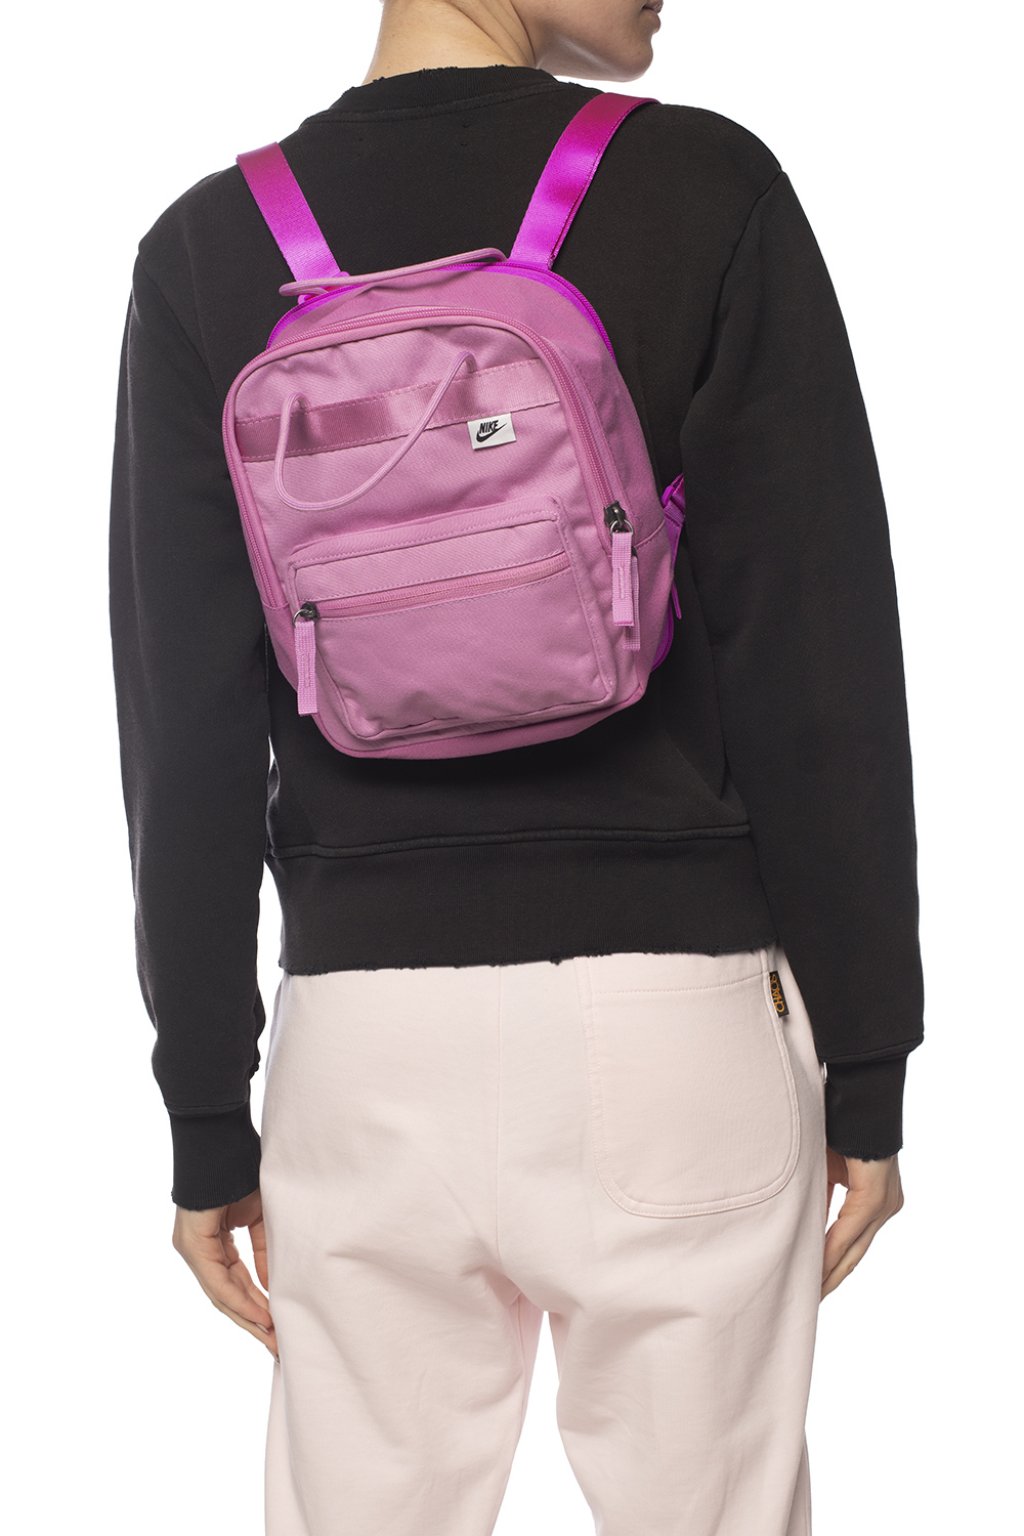 nike tanjun mini backpack pink